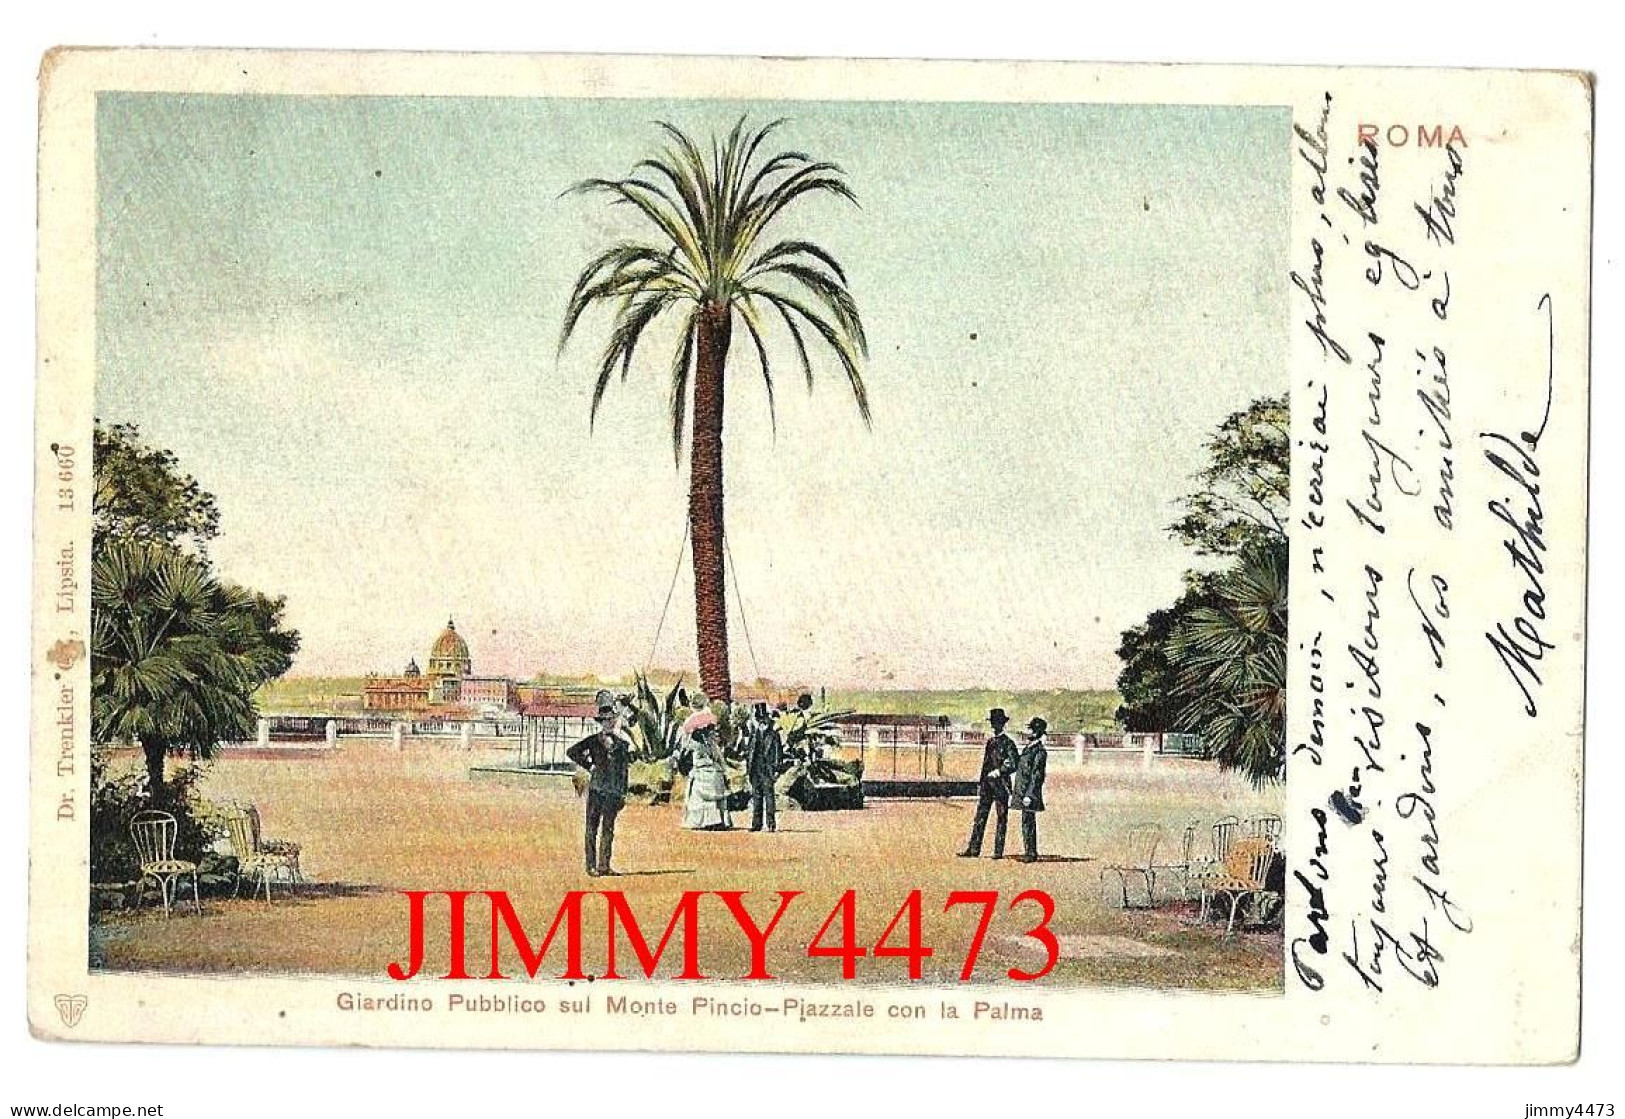 ROMA Lazio En 1902 - Giardino Pubblico Sul Monte Pincio Piazzale Con La Palma Dr.Trenkler Lipsia - Parks & Gärten